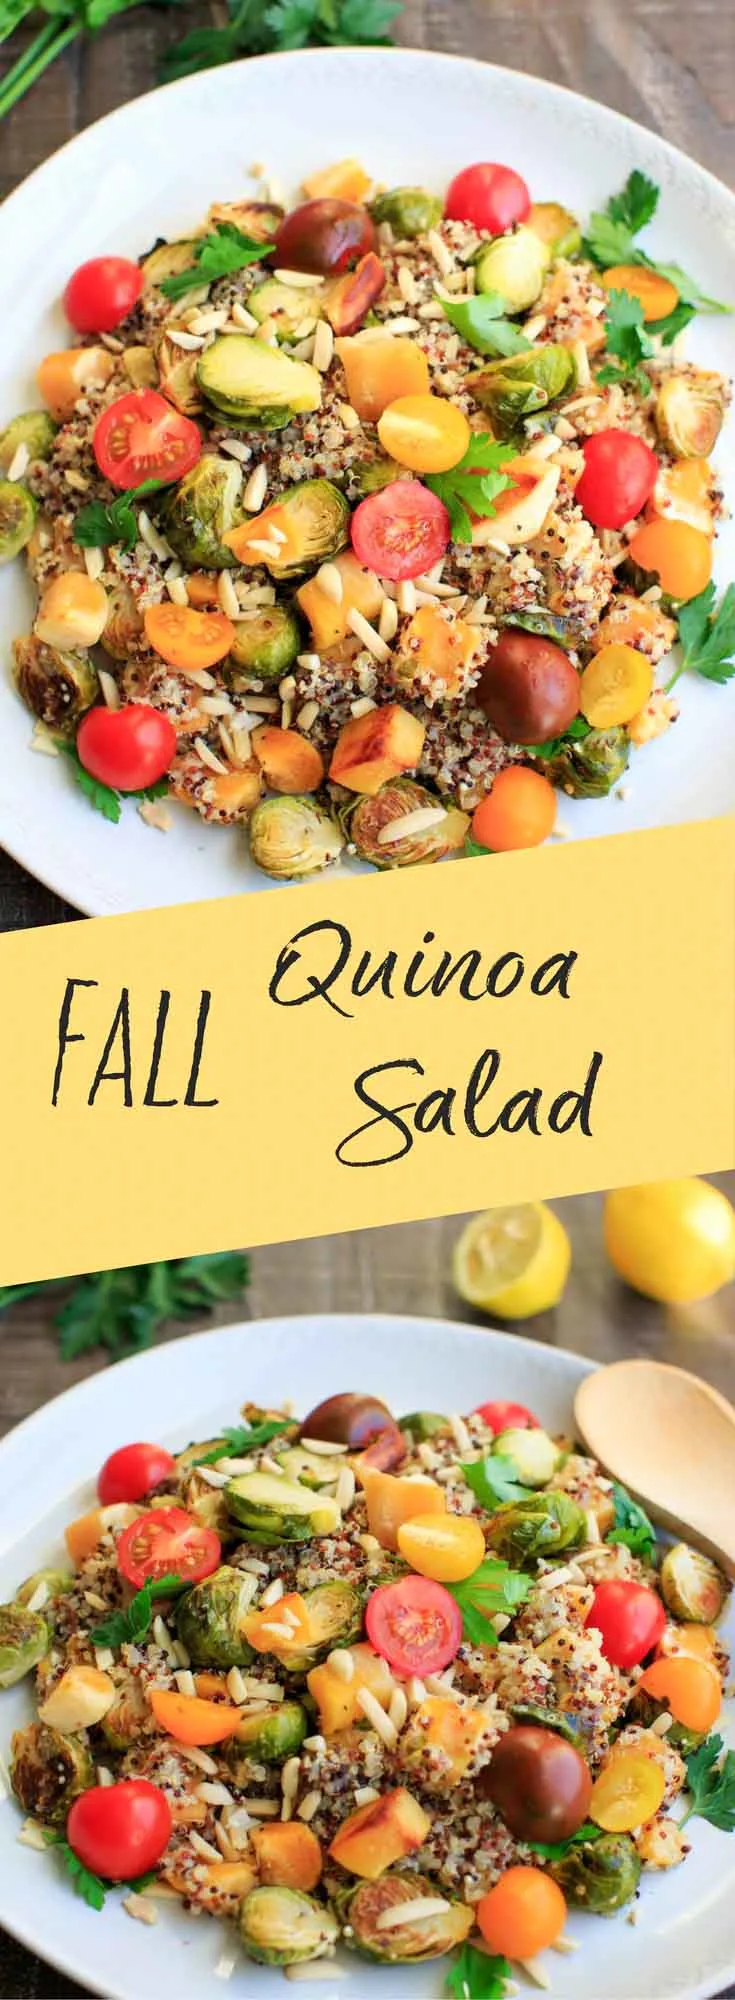 Fall Quinoa Salad pin